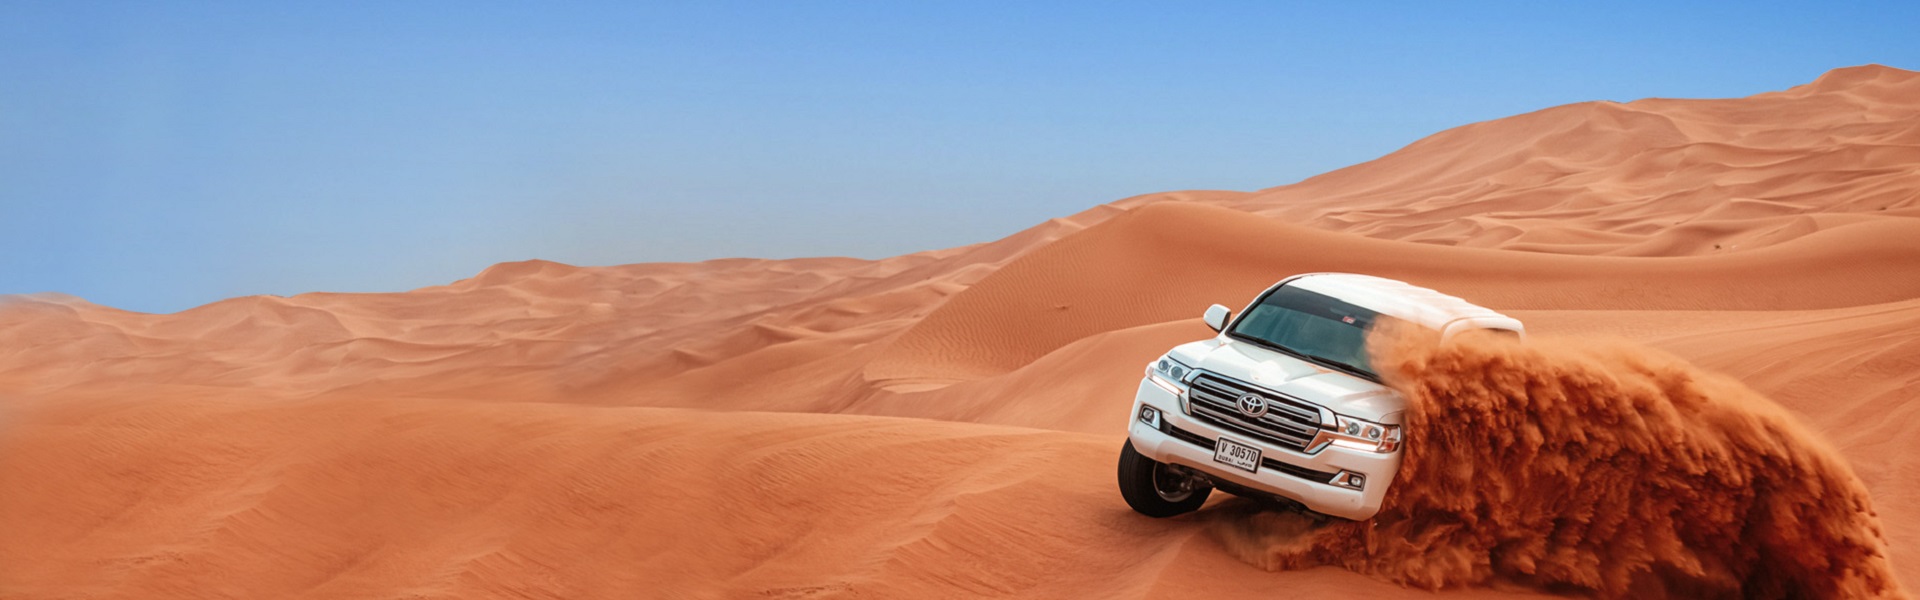 Rent a car Belgrade | Desert safari in Dubai